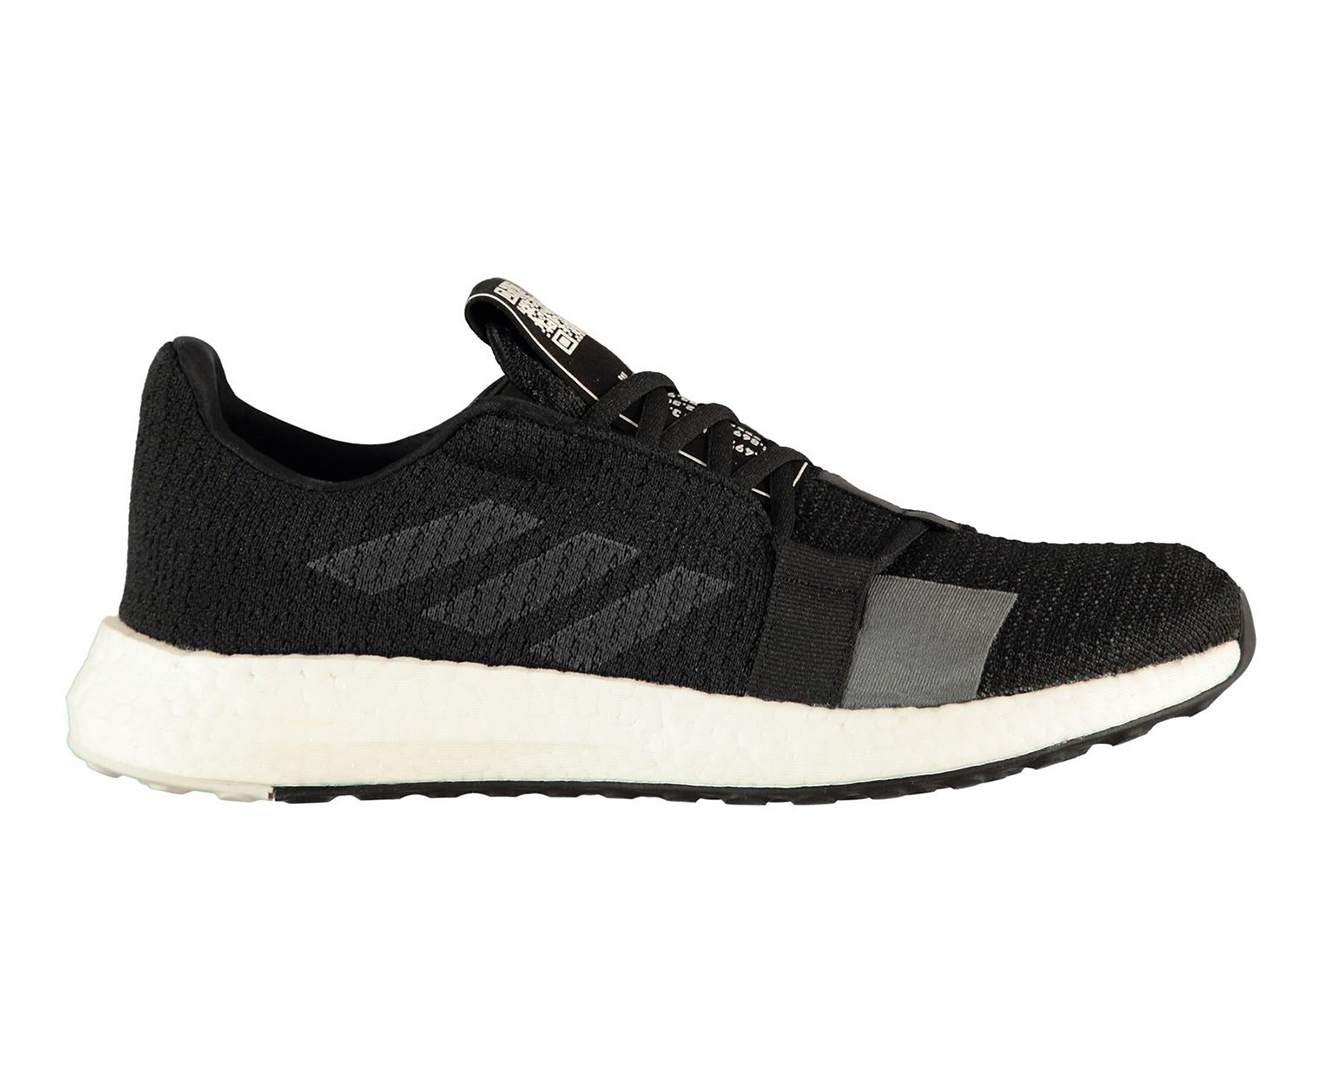 Adidas Men's Senseboost Go Running Shoes - Core Black/Grey Five/White ...